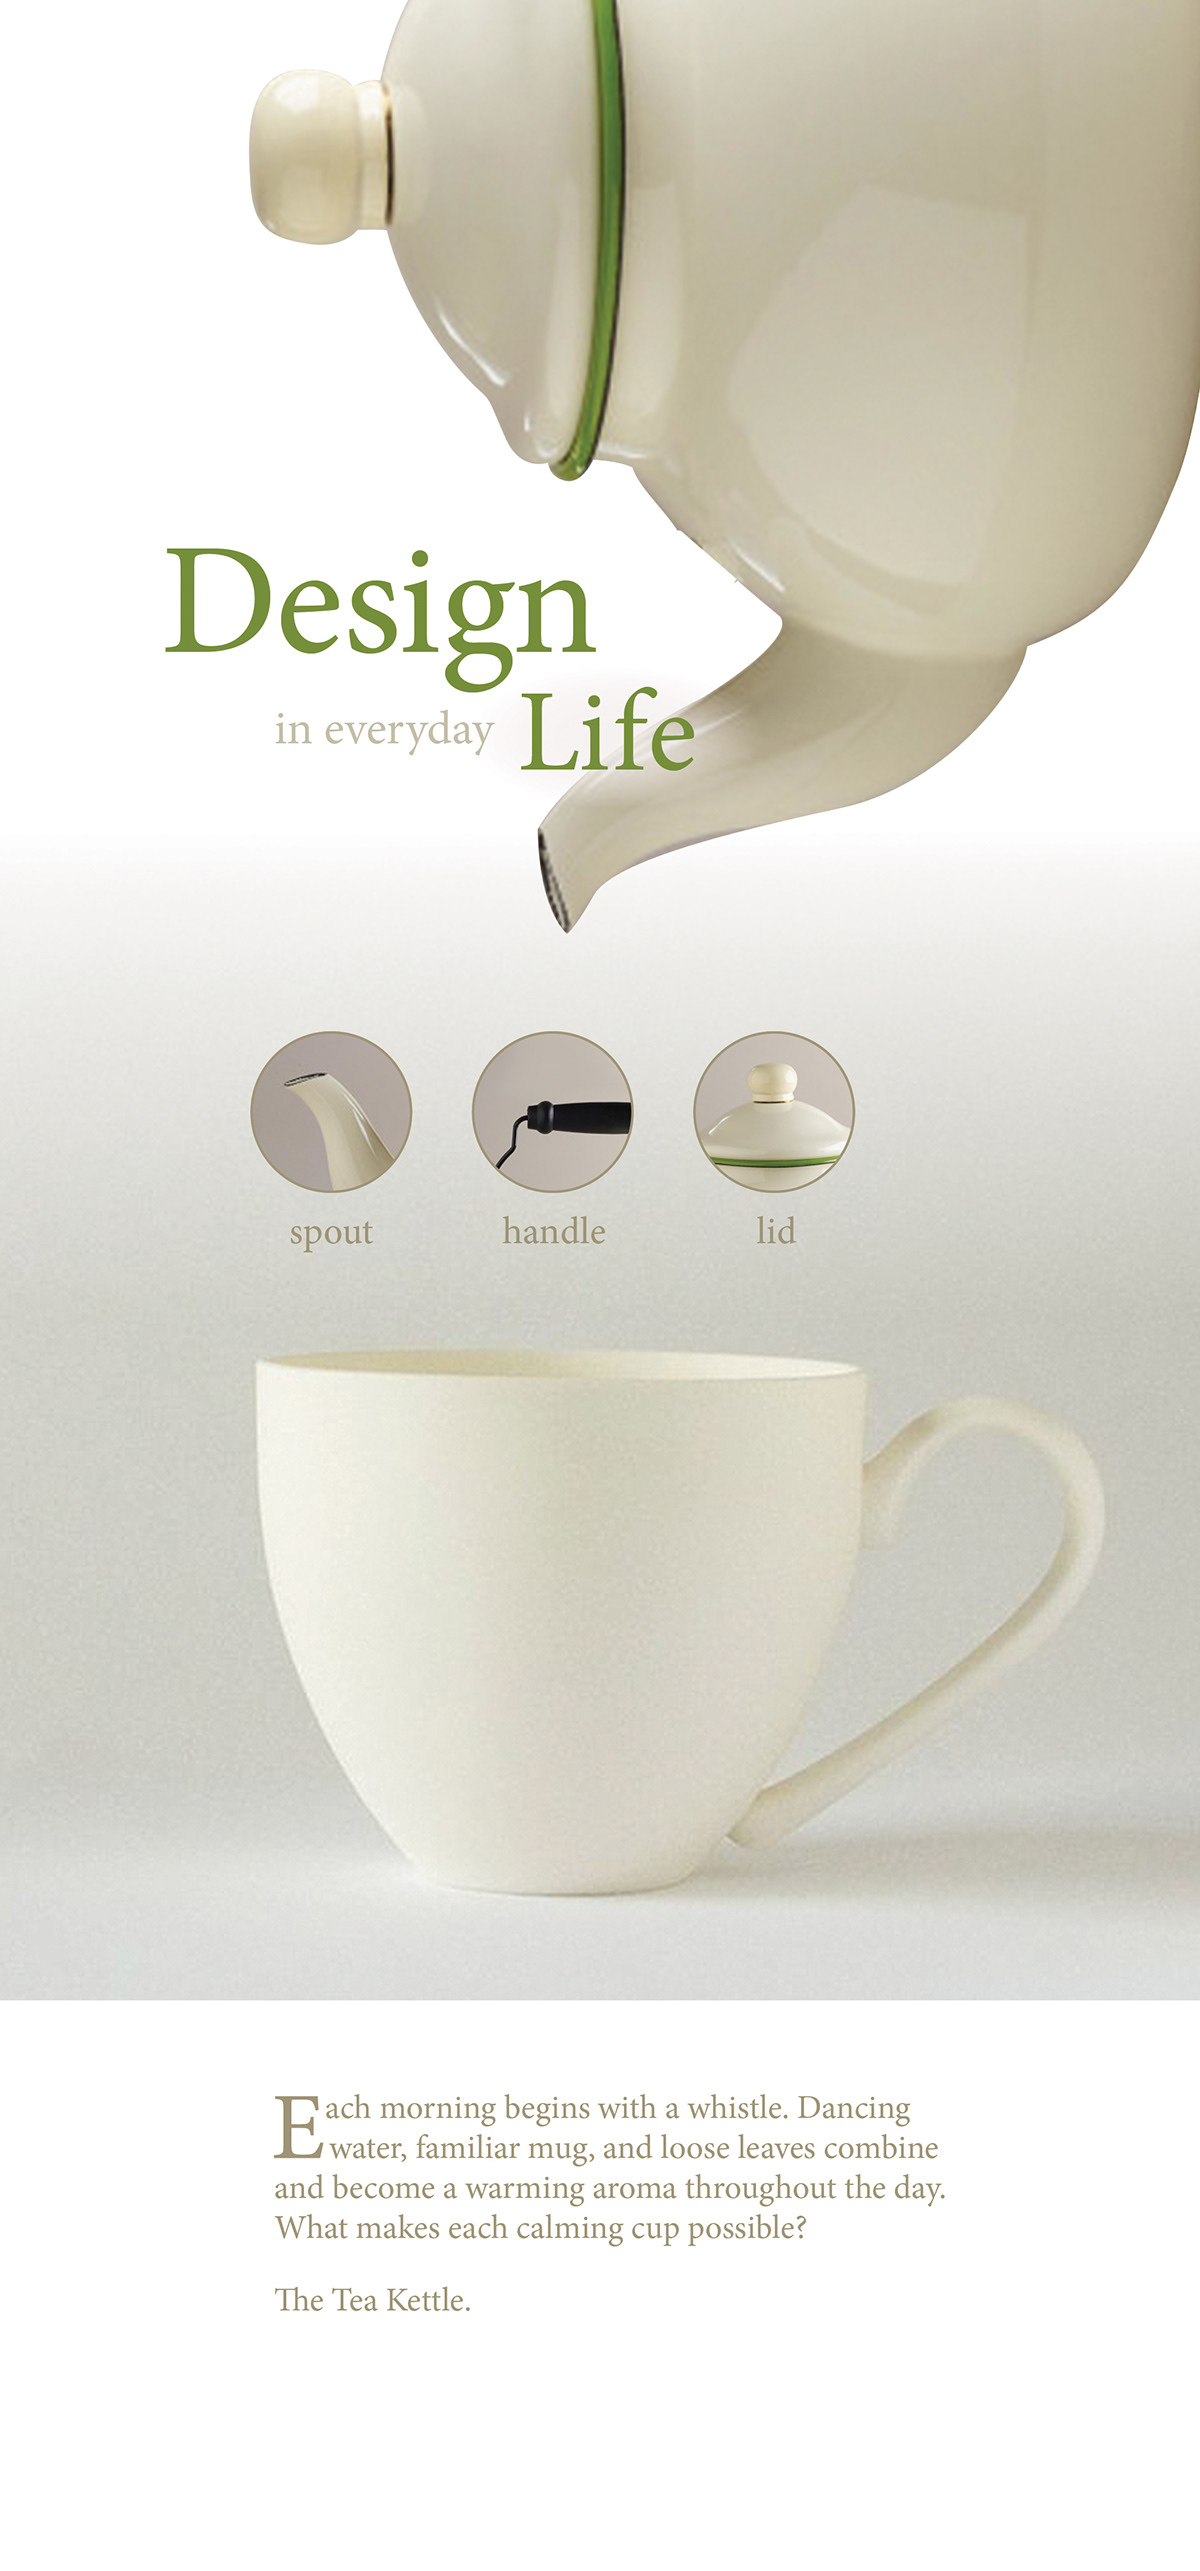 tea brand advertisement ad design life everyday life EAMES tea kettle tea cup